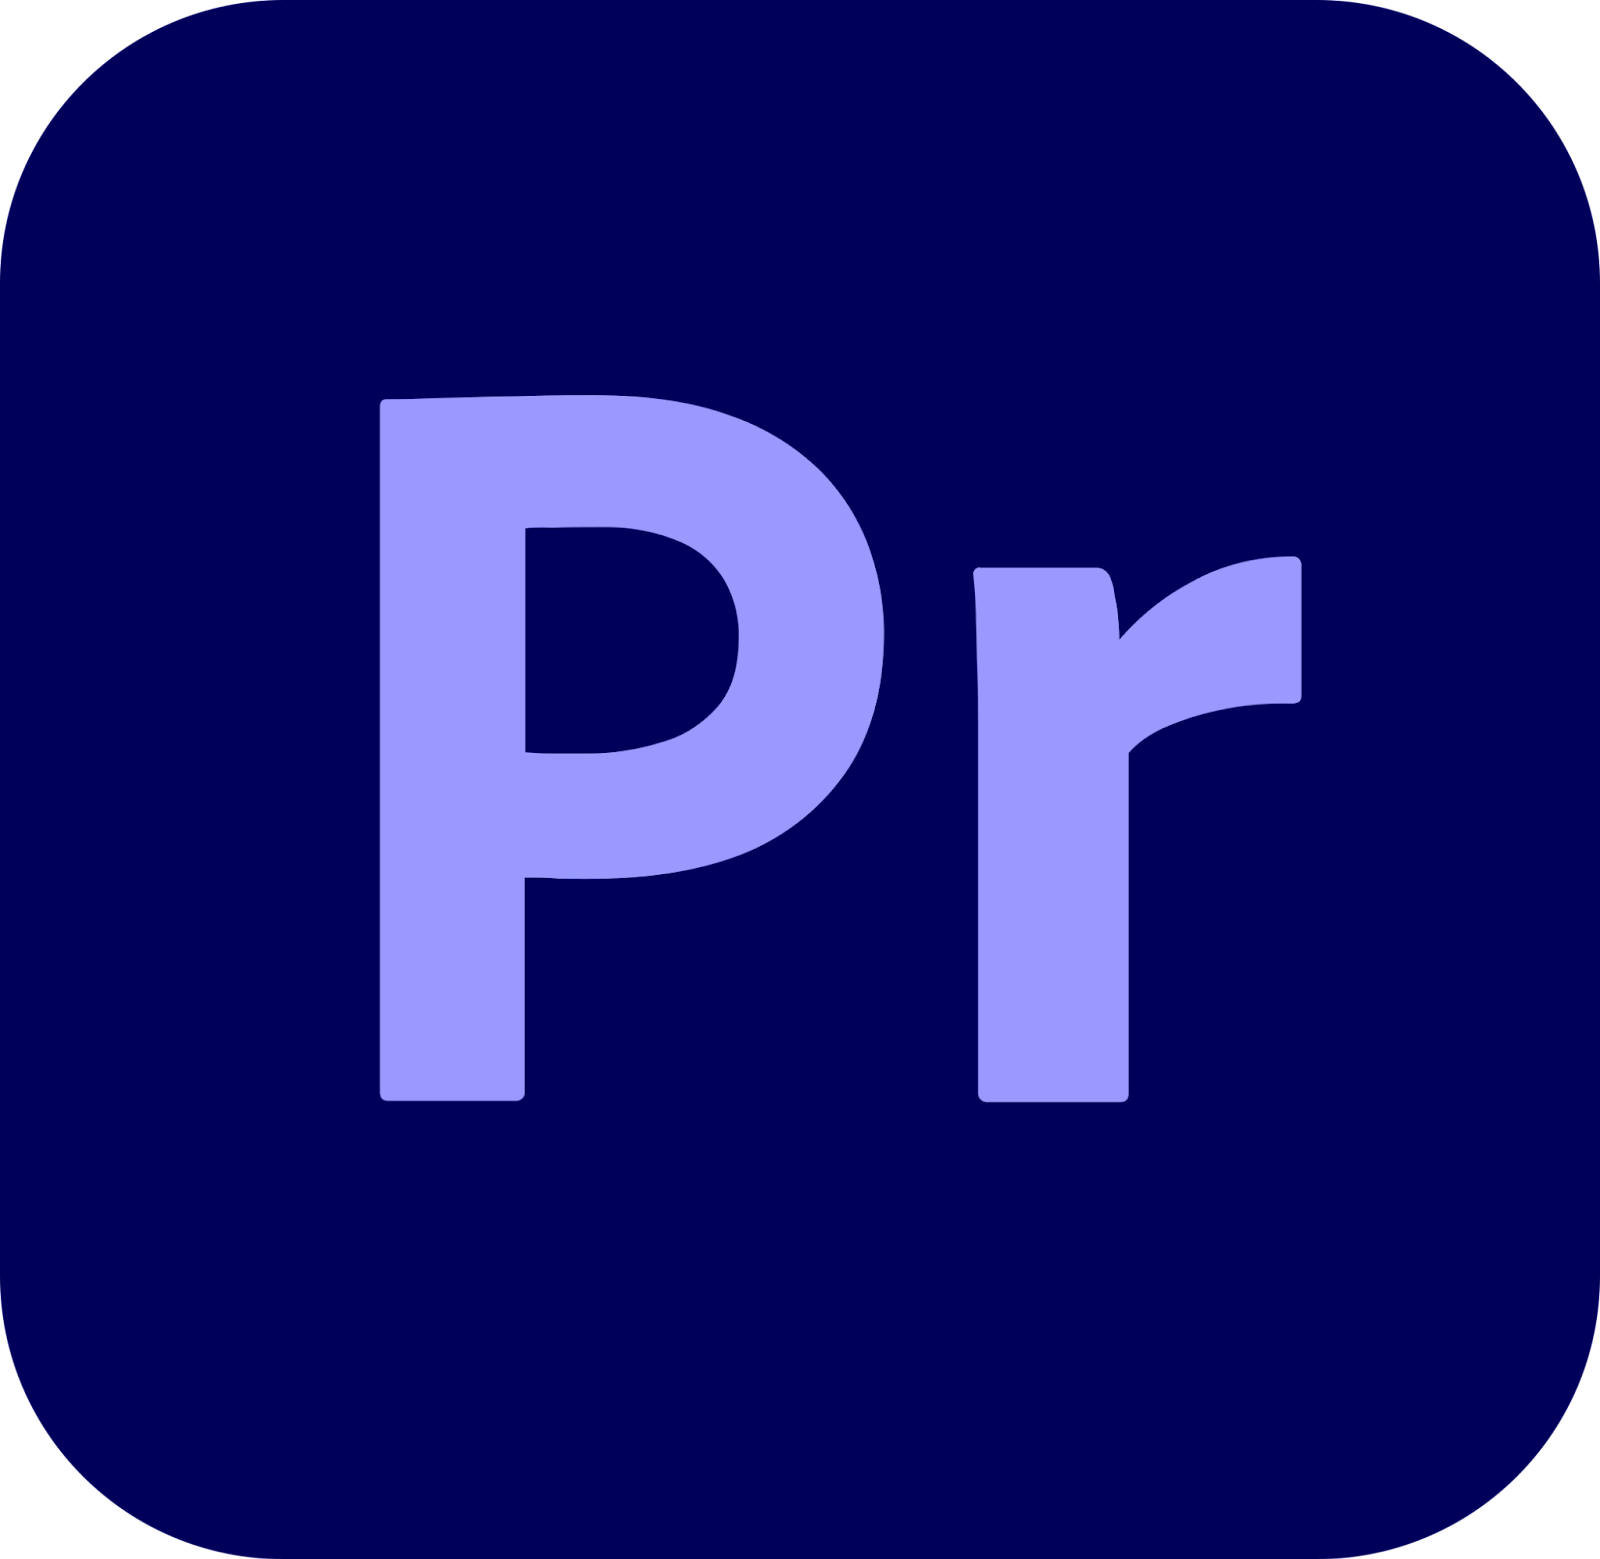 Premiere Pro Ai transcription software